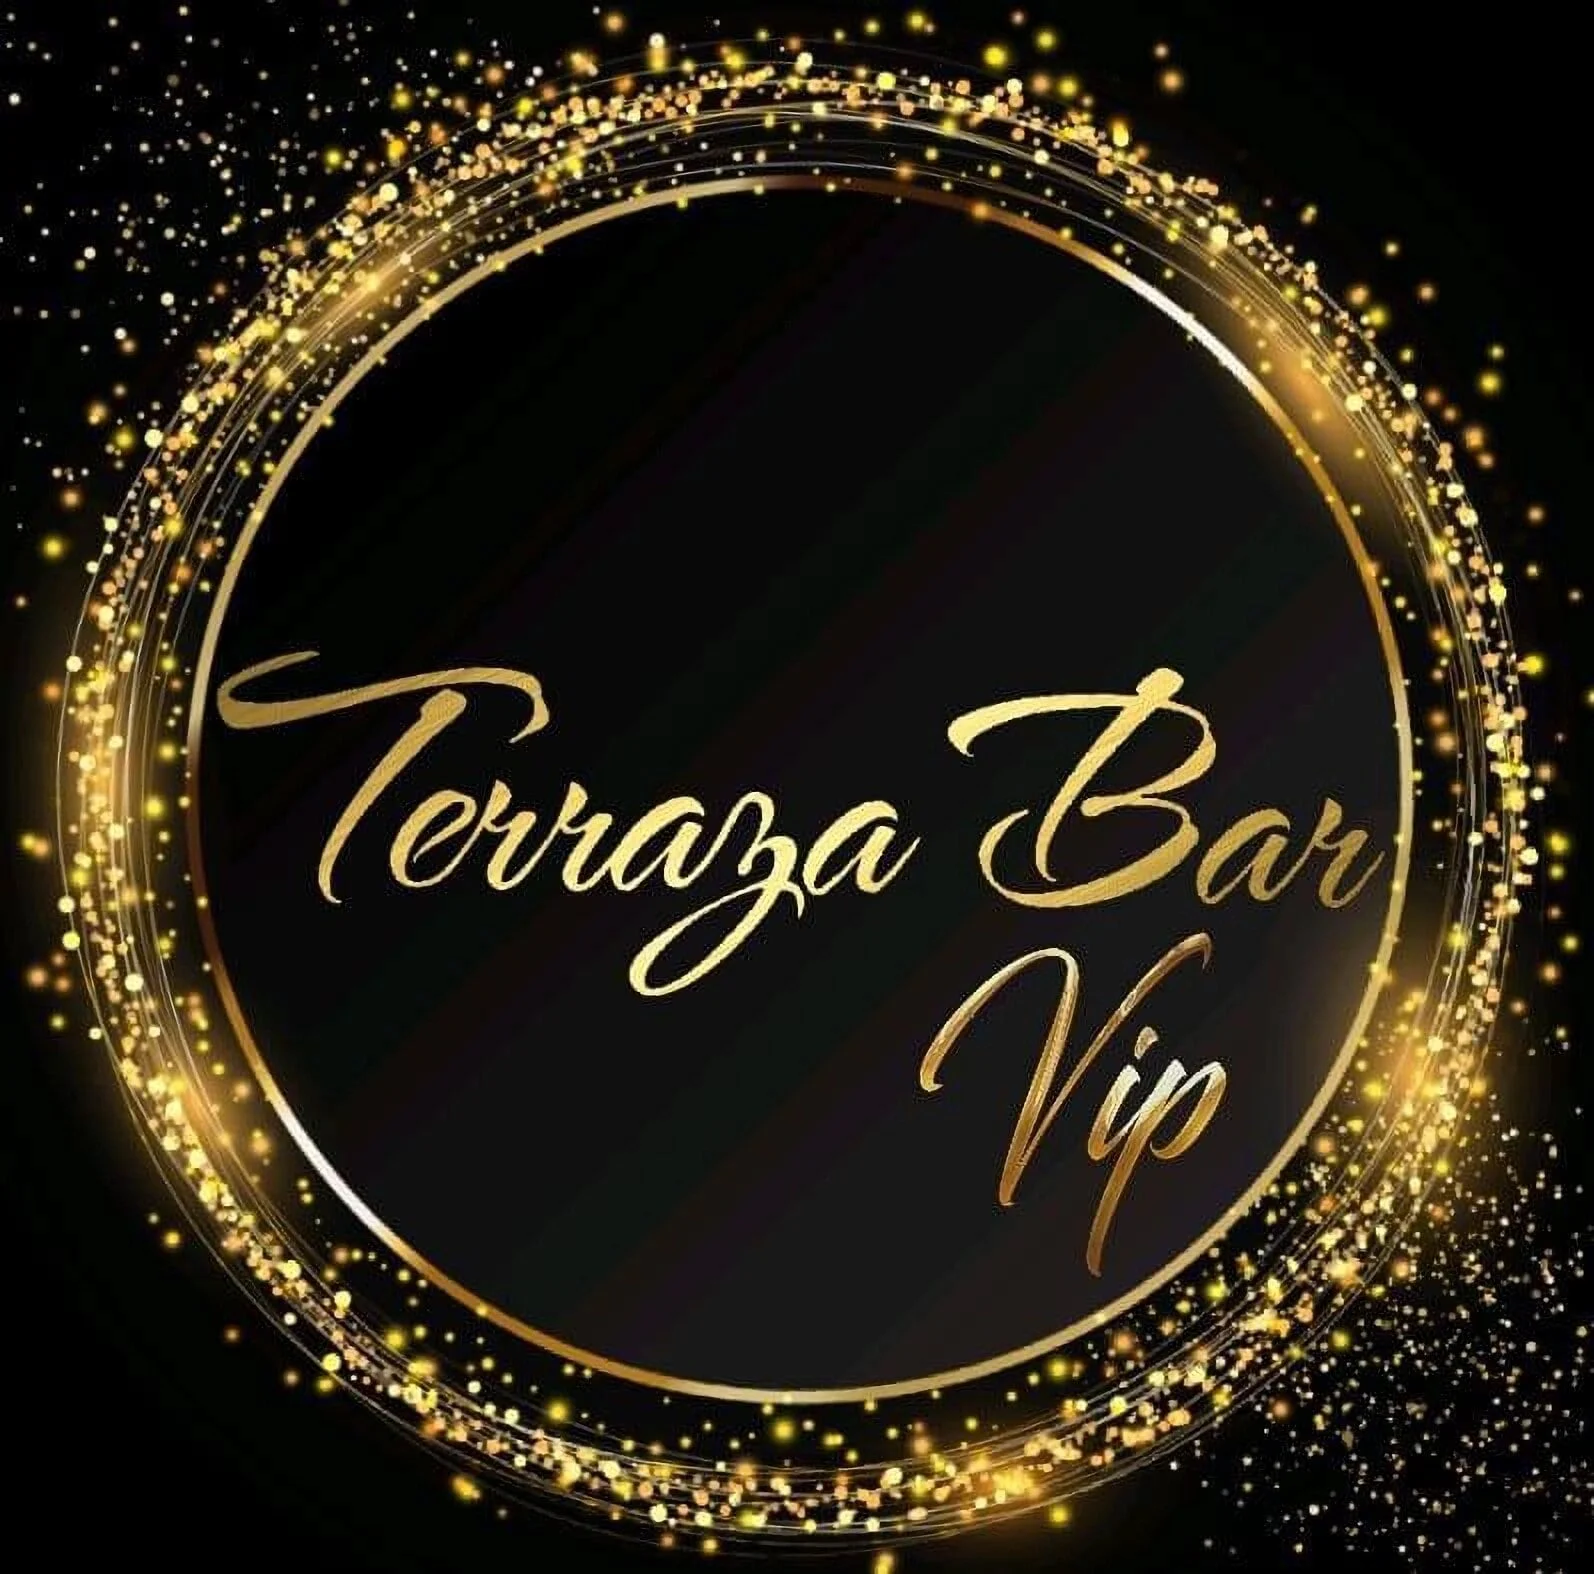 Terraza Bar La Merced-10355